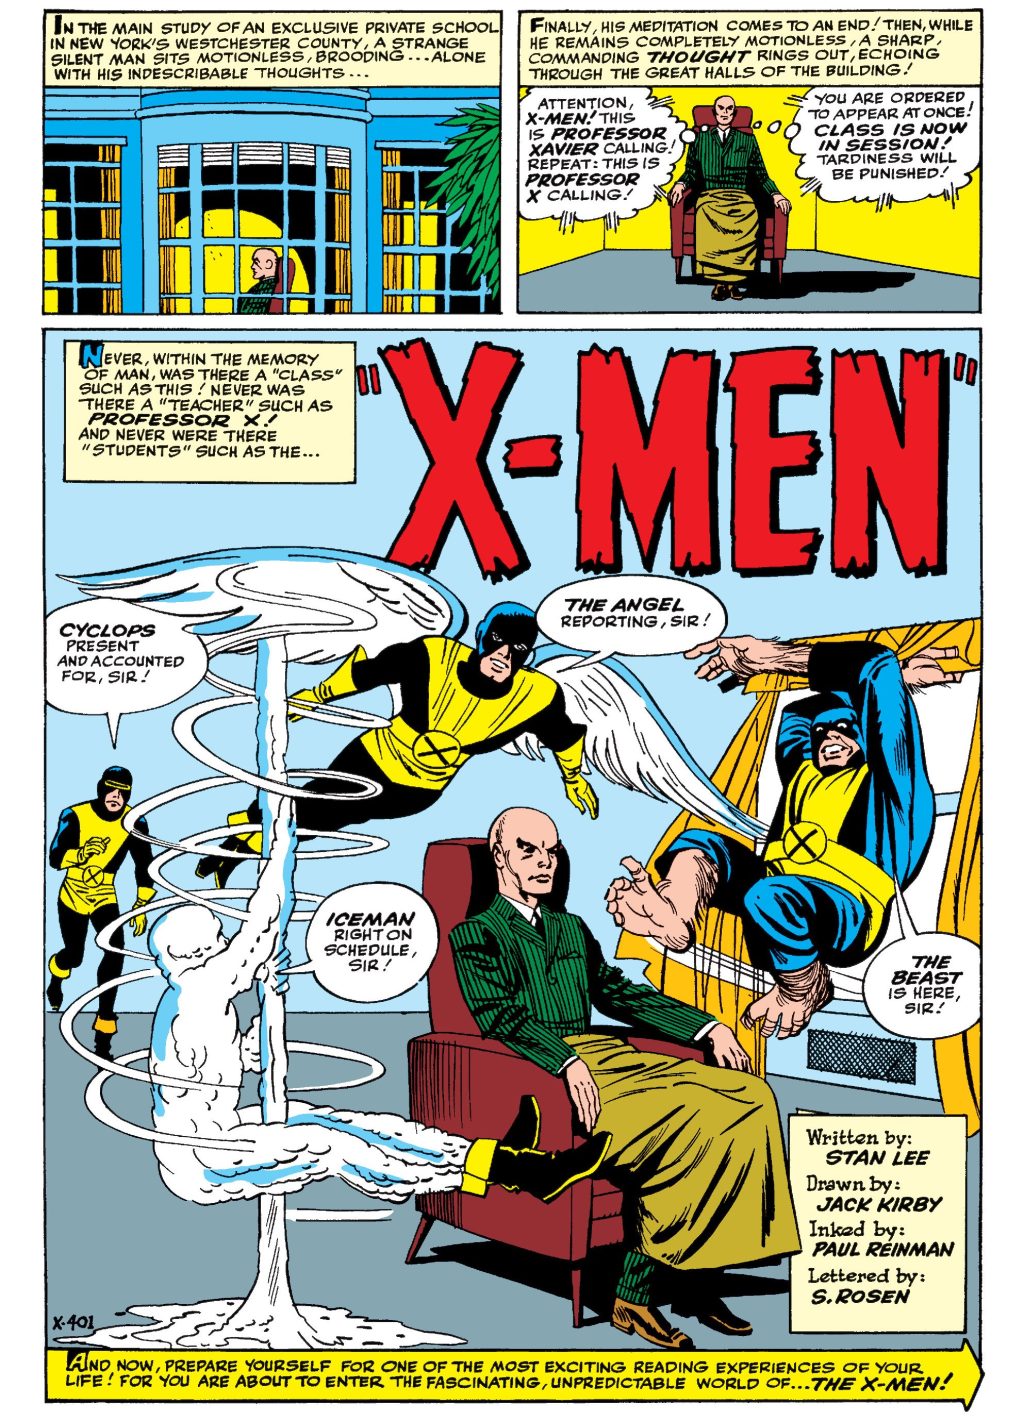 The X-Men respond to Professor Xavier's call in Uncanny X-Men Vol. 1 #1 "X-Men" (1963), Marvel Comics. Words by Stan Lee, art by Jack Kirby, Paul Reinman, and Sam Rosen.